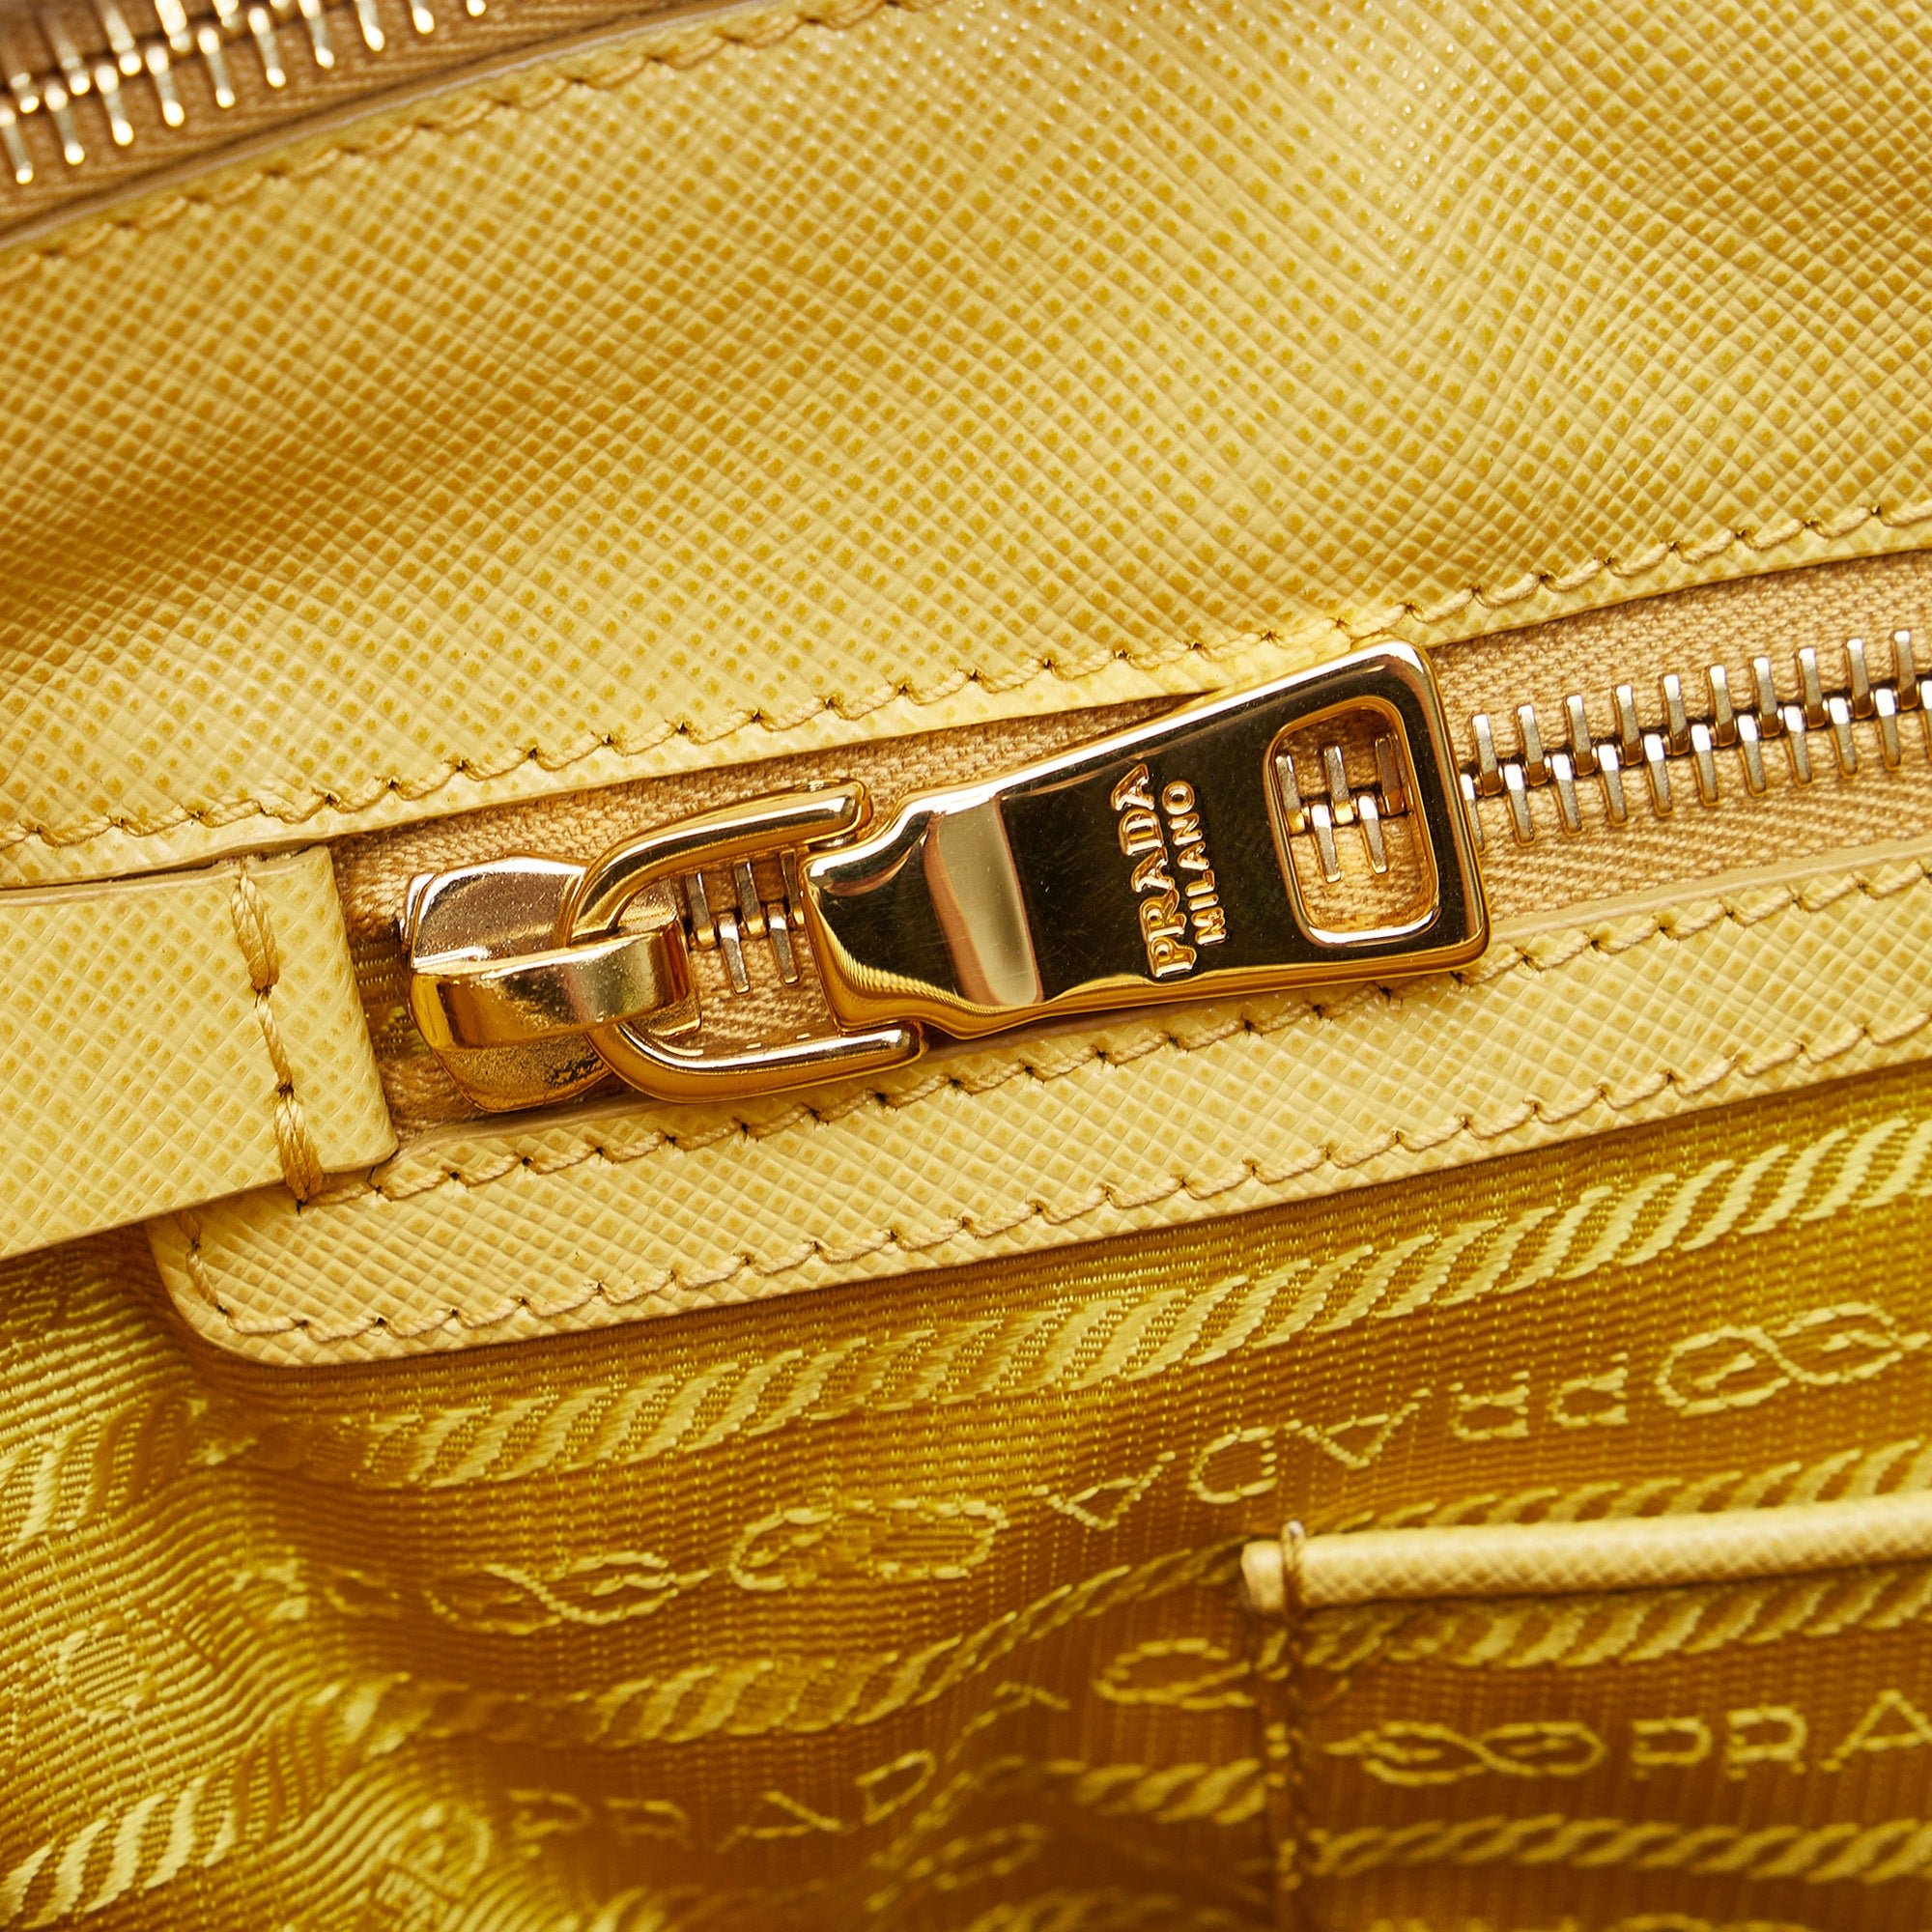 Saffiano Galleria Double Zip Handbag – LuxUness